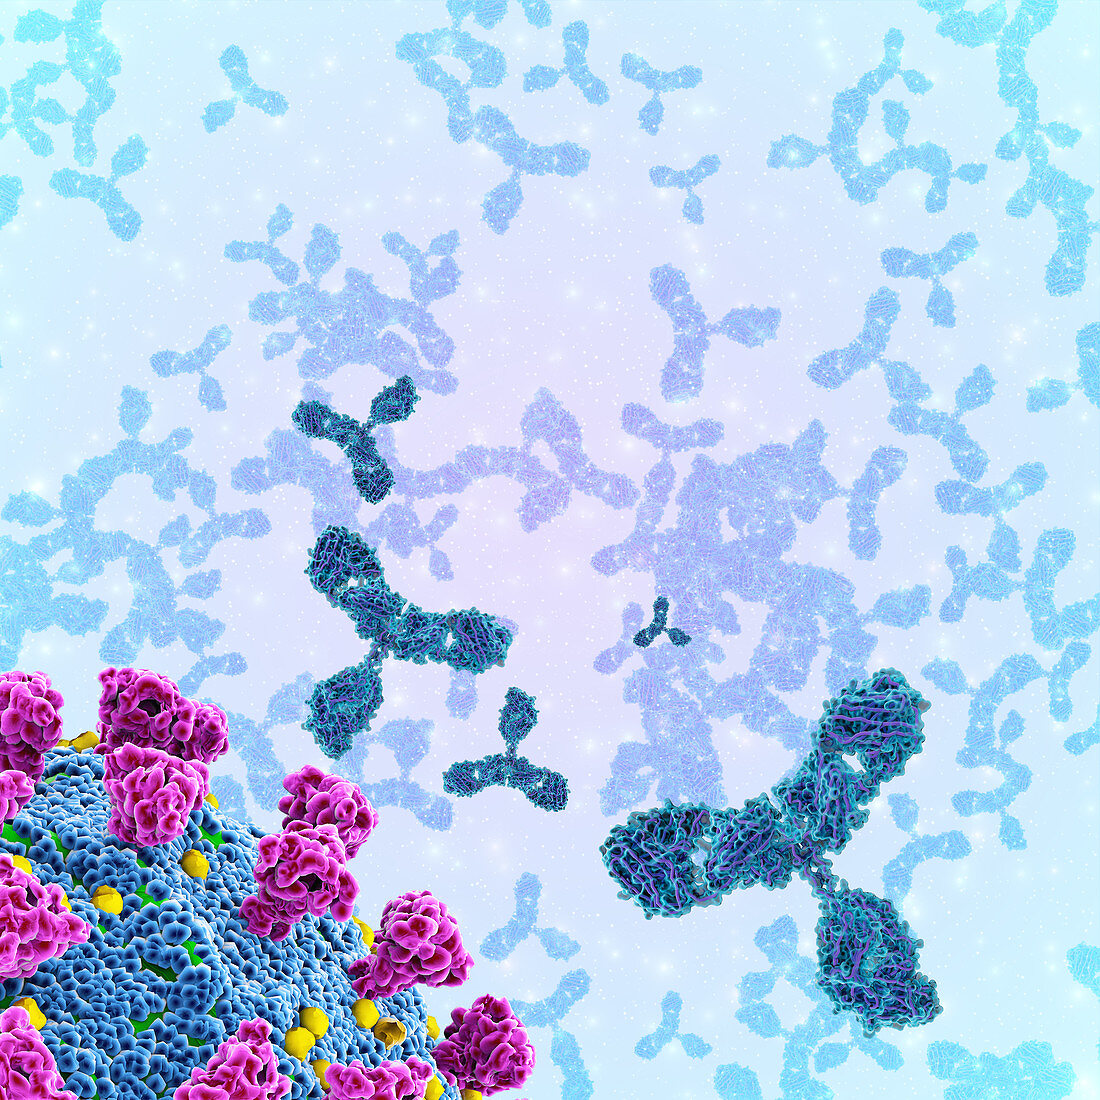 Antibodies and covid-19 coronavirus, illustration